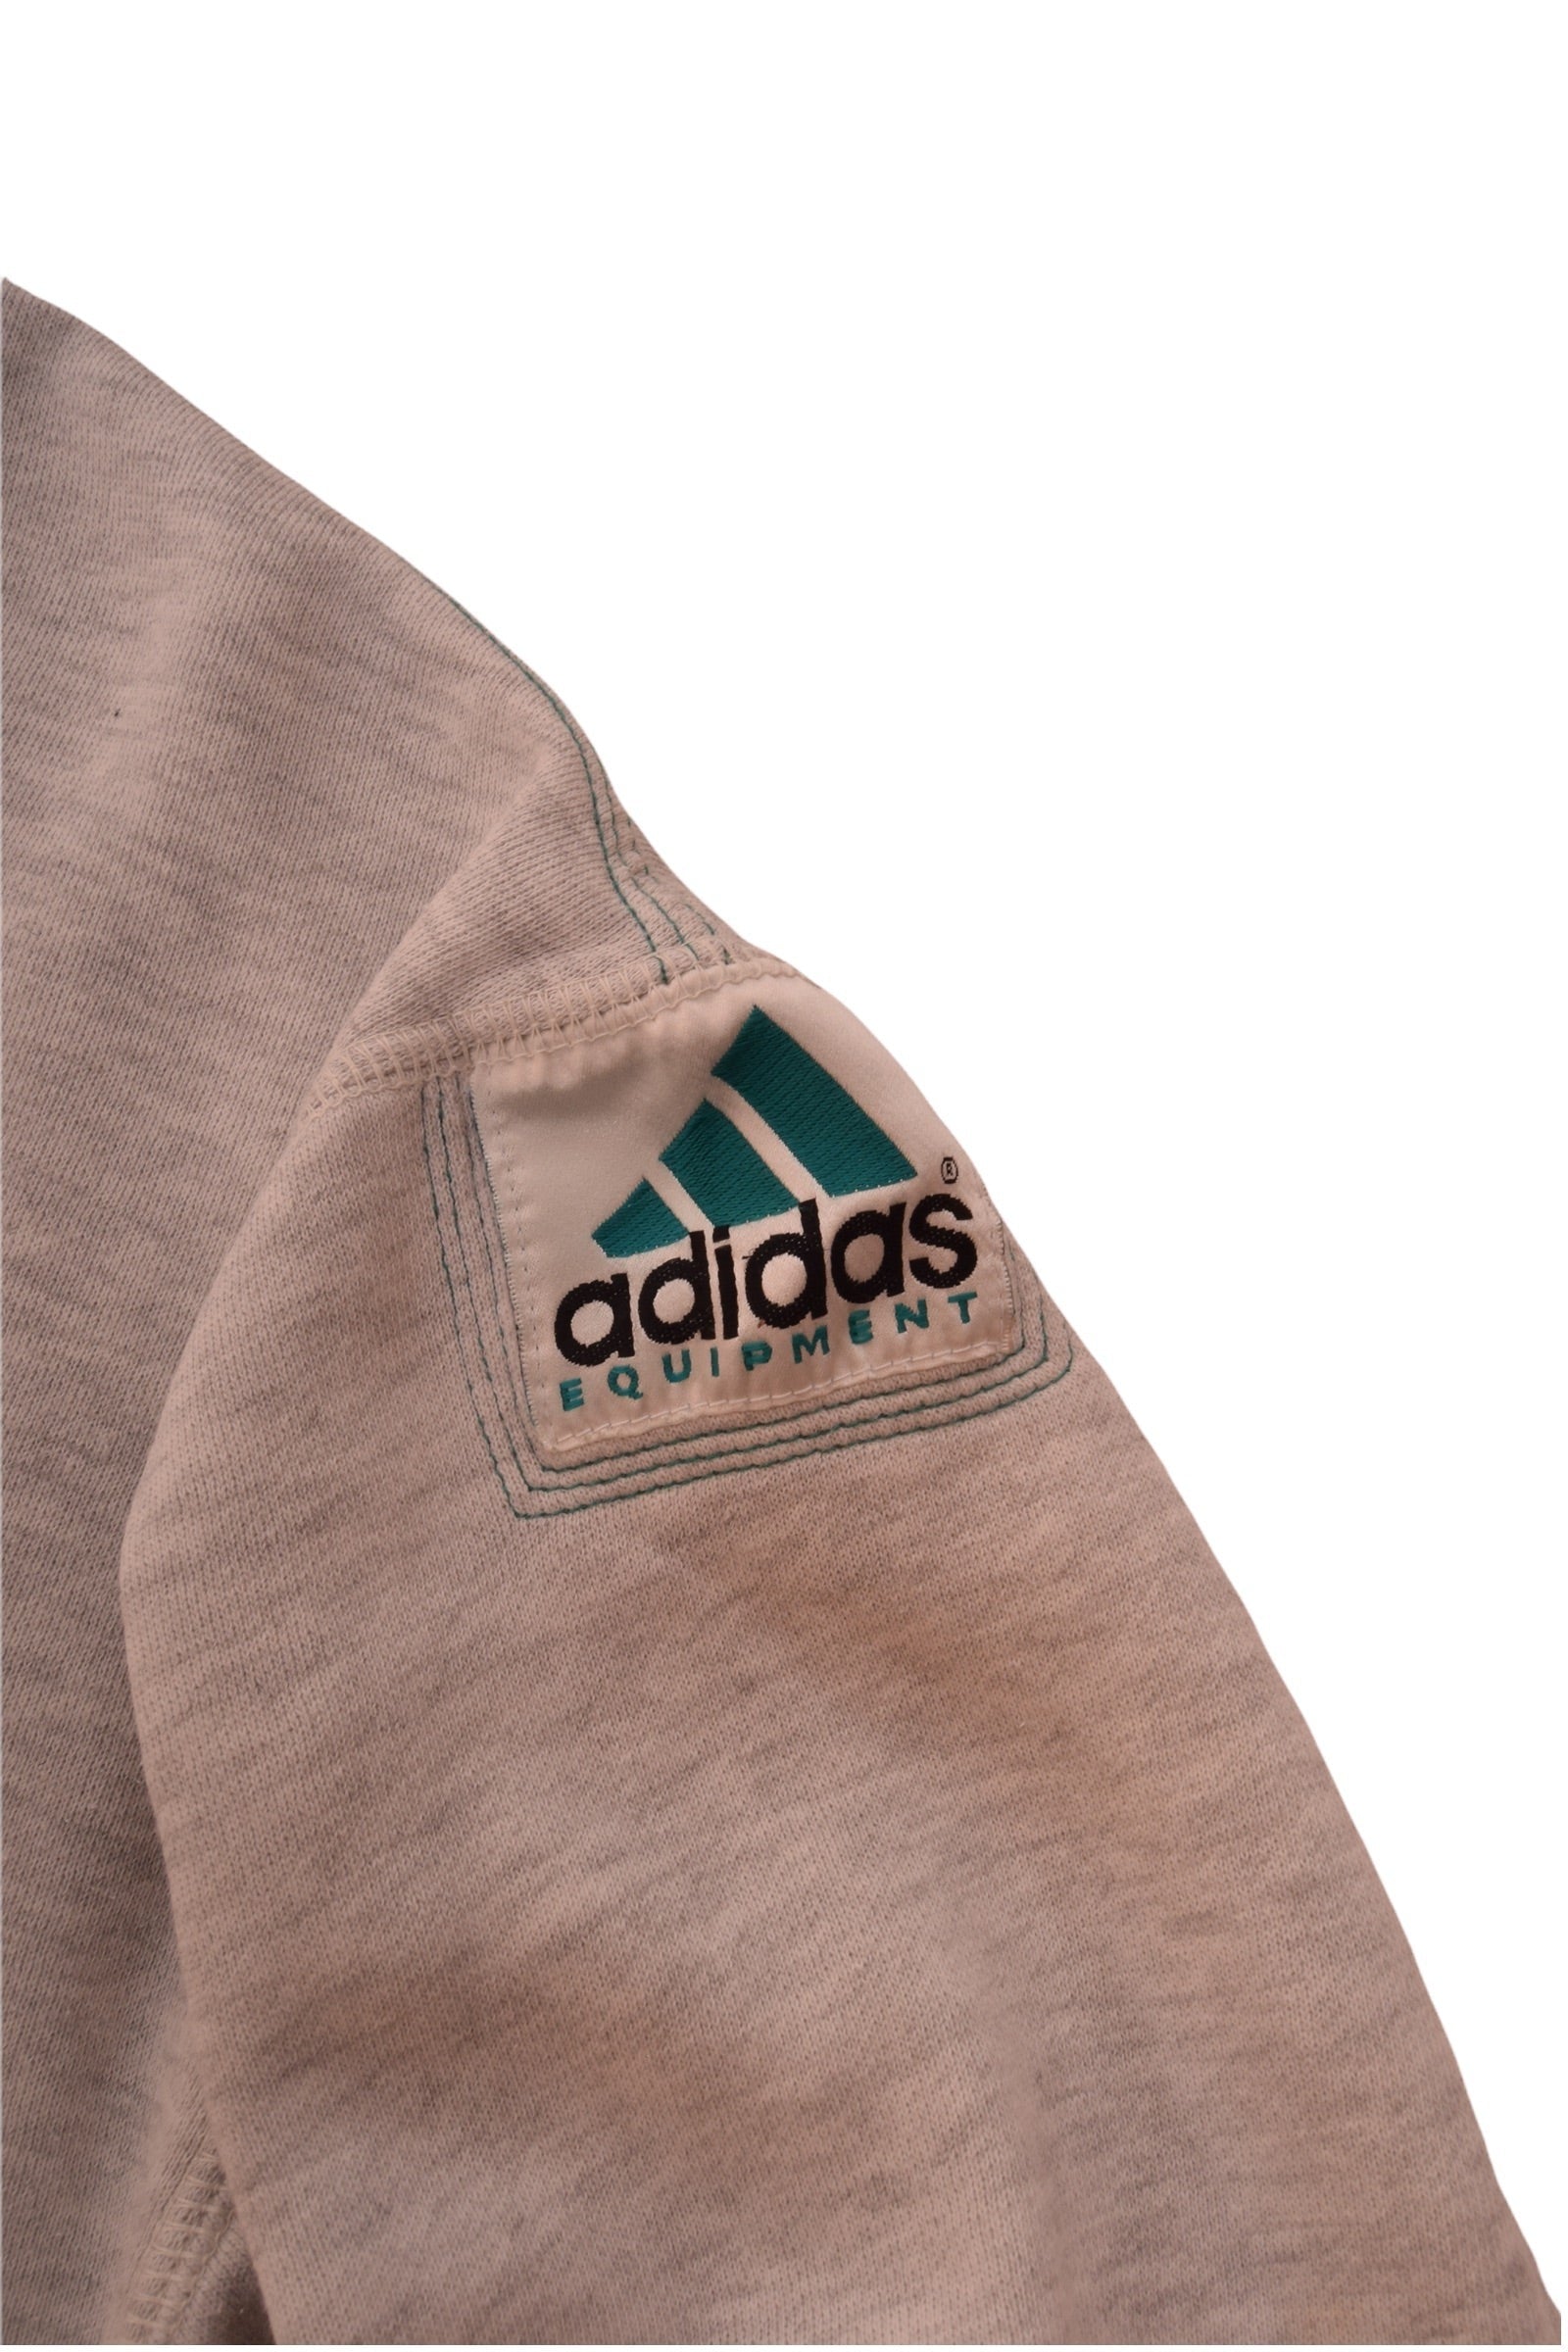 Vintage 90's Adidas Equipment Sweatshirt Crew Neck Grey Size XL